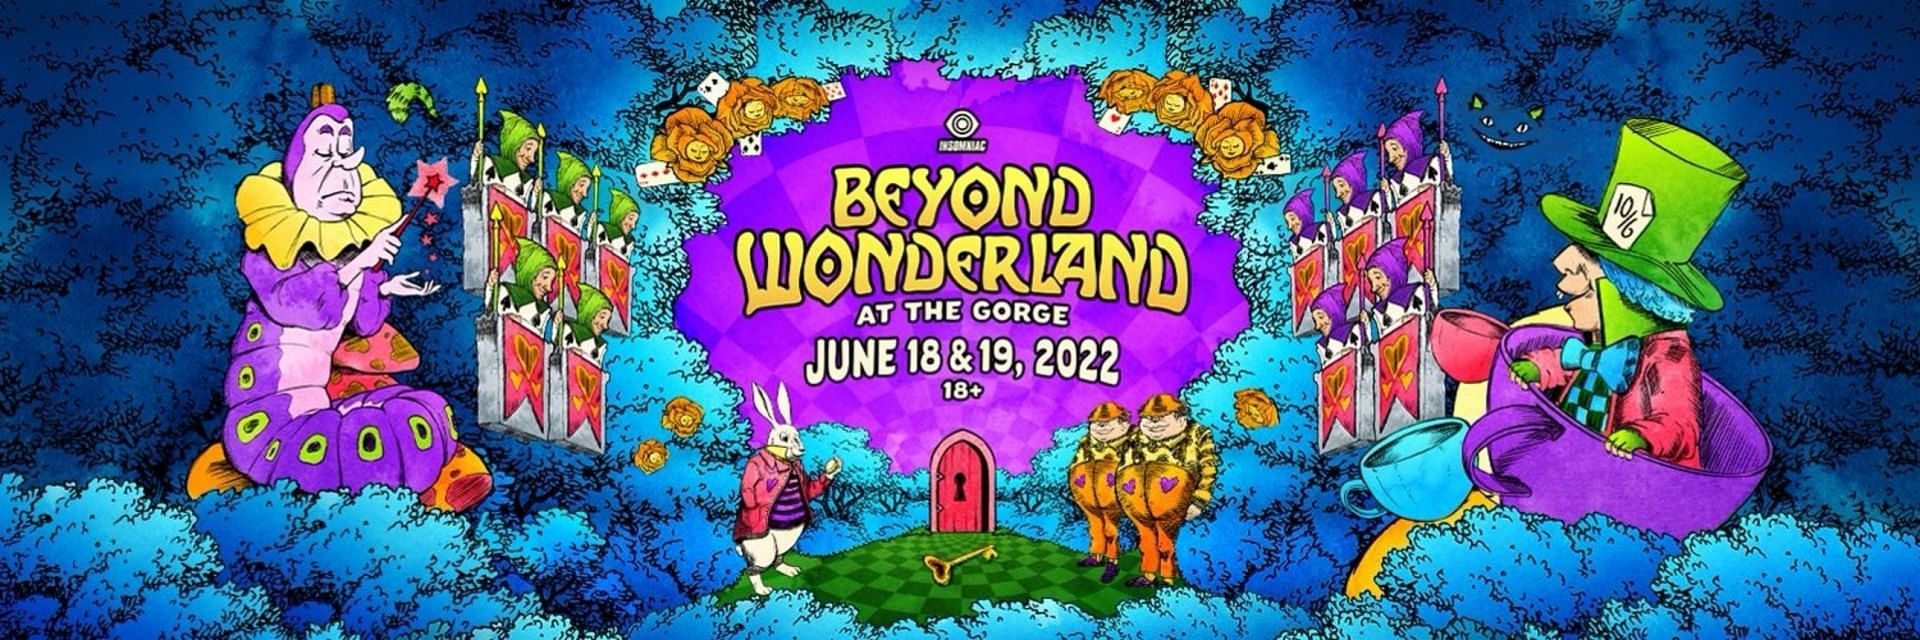 beyond wonderland gorge lineup